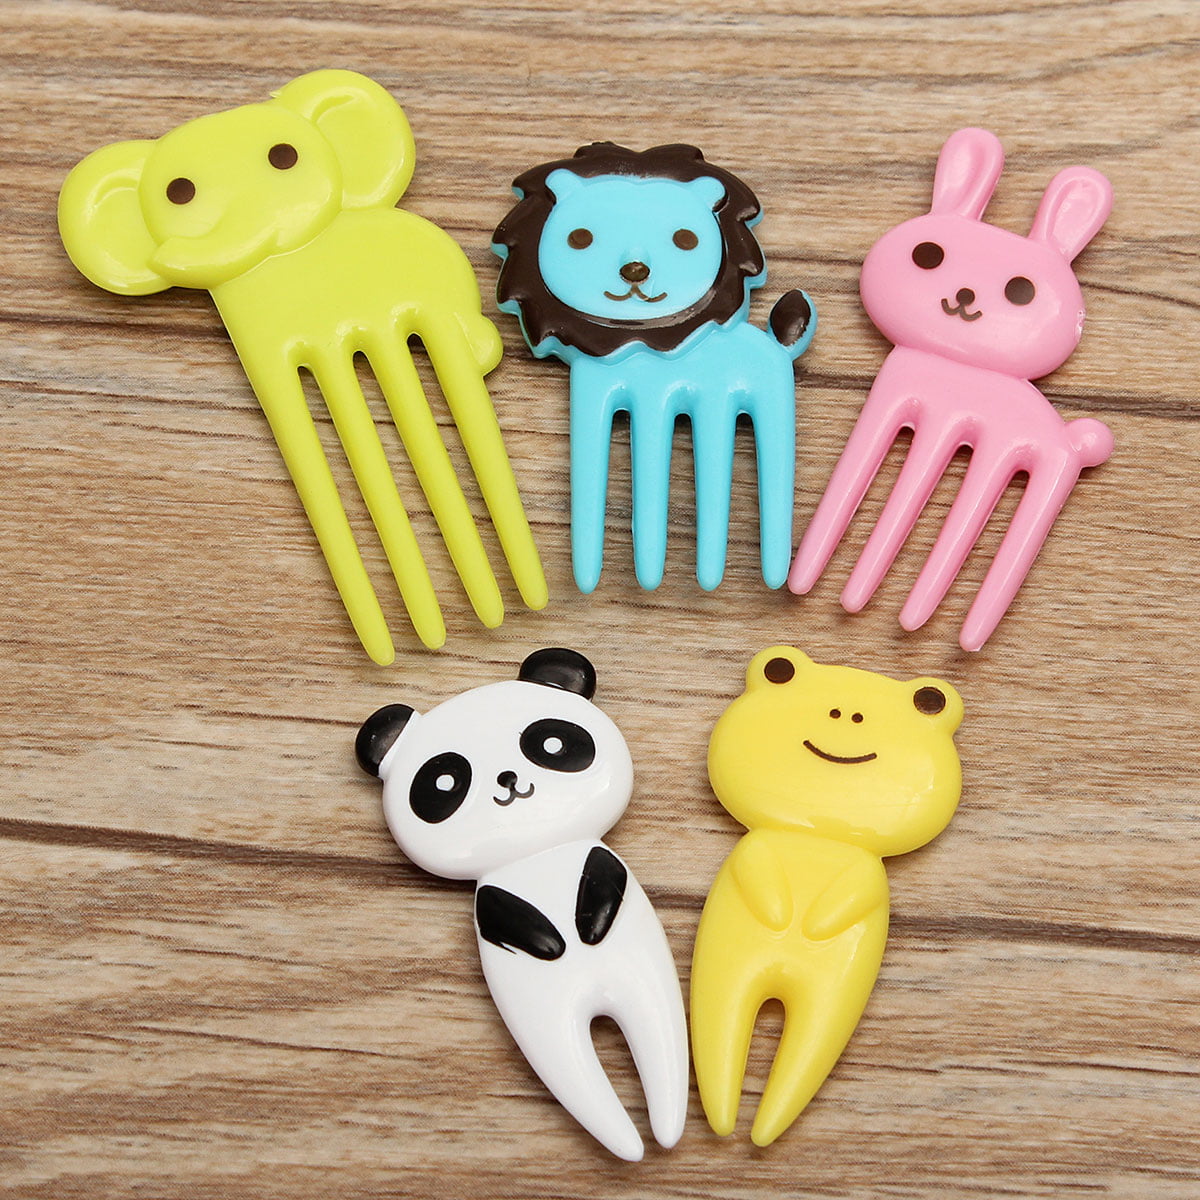 Bento Cute Animal Fruit Food Picks Forks Lunch Box Accessory Decor Tool 10pcs HS